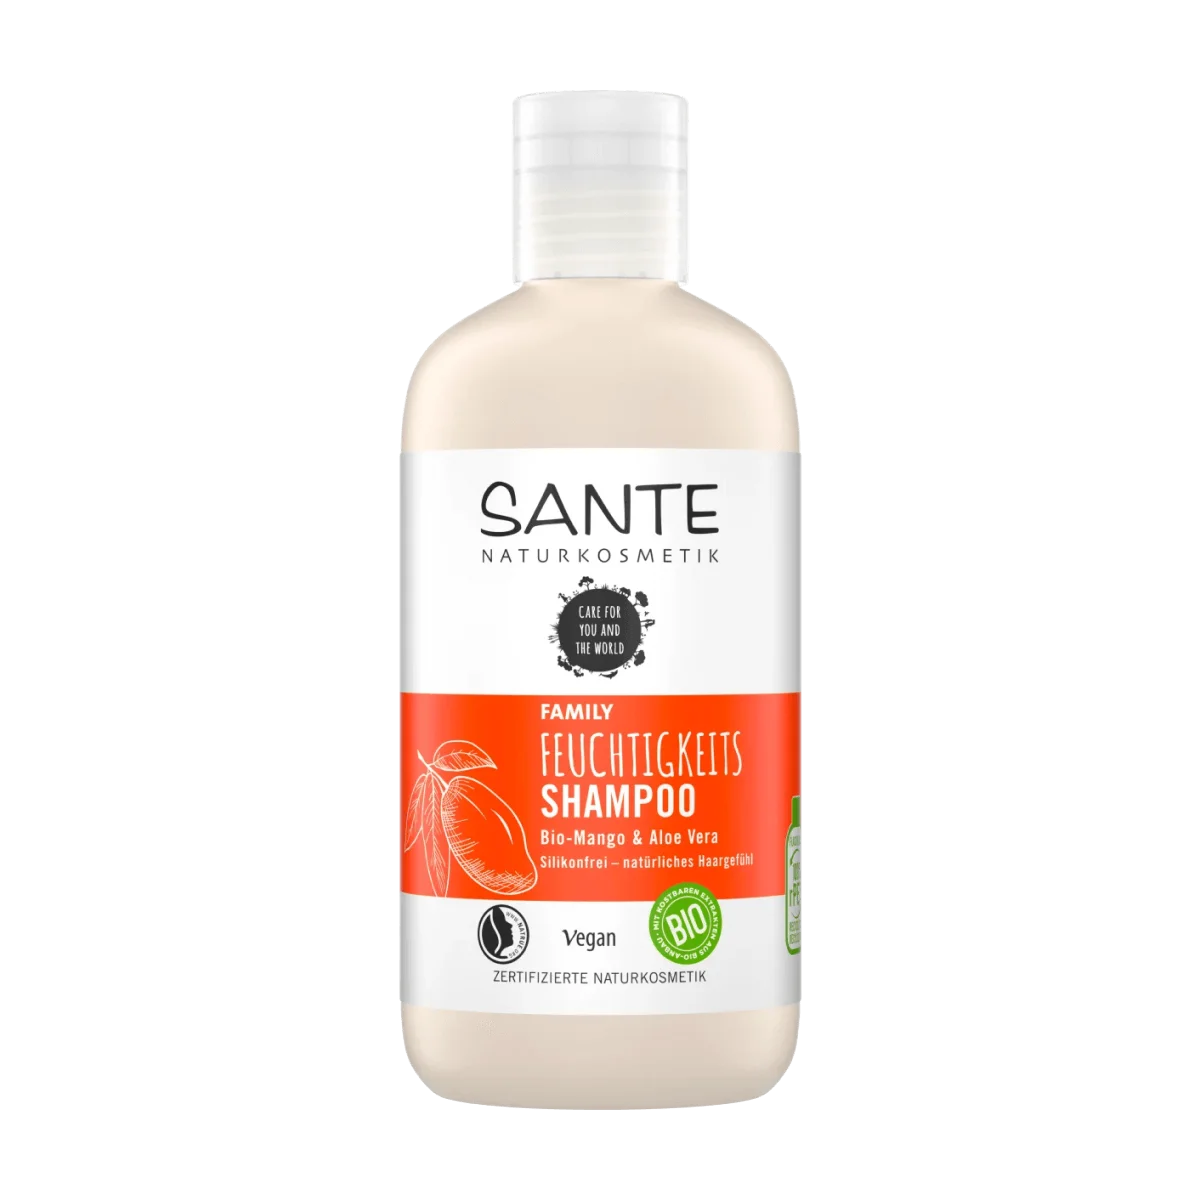 SANTE NATURKOSMETIK Shampoo Feuchtigkeit Family Bio-Mango & Aloe Vera, 250 ml